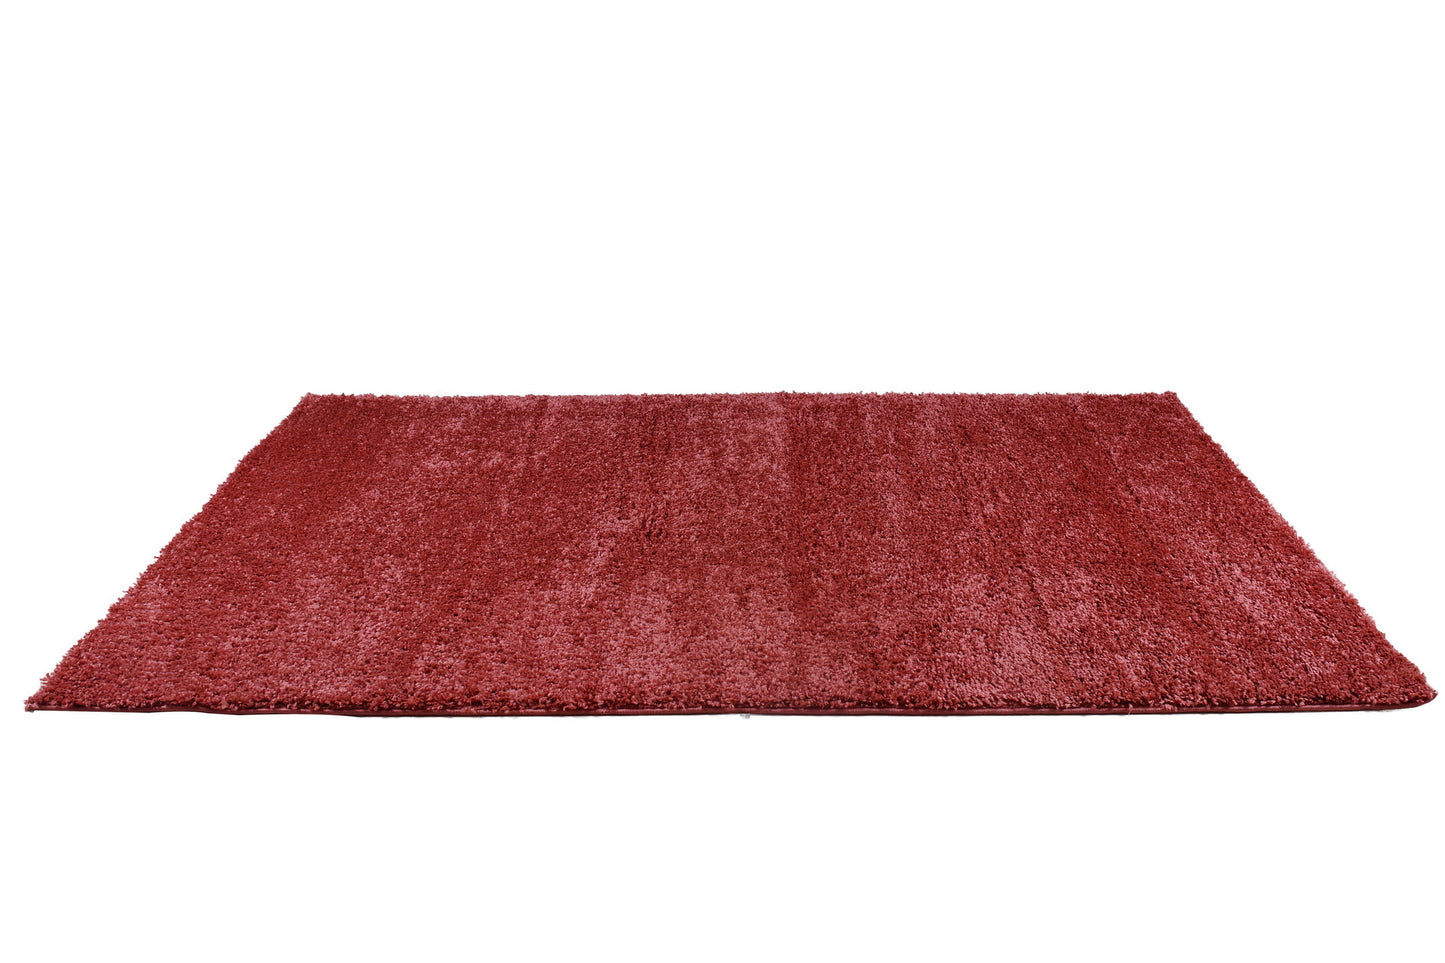 ladole rugs solid peach orange shaggy meknes durable medium pile indoor area rug carpet 8x11 710 x 105 240cm x 320cm 4x6, 4x5 ft Small Carpet, Home Office, Living Room, Bedroom